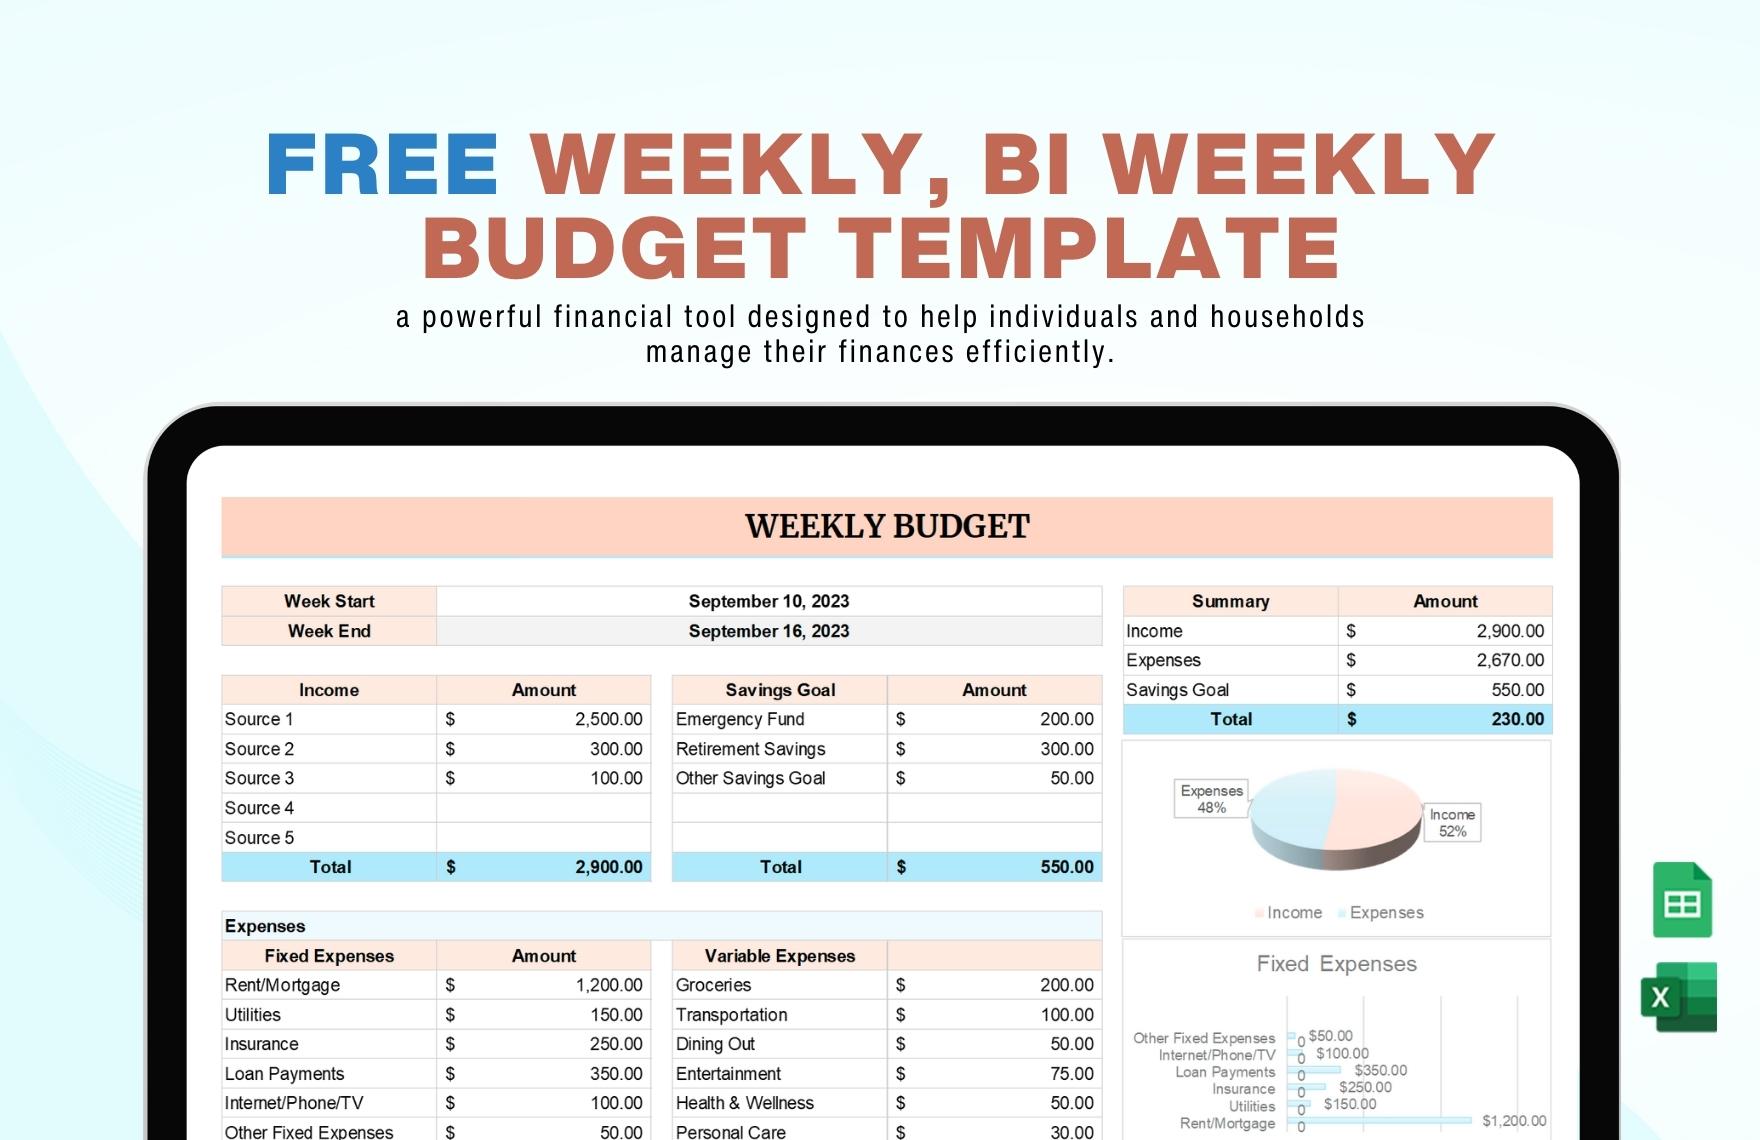 Free Weekly, Bi Weekly Budget Template in Excel, Google Sheets